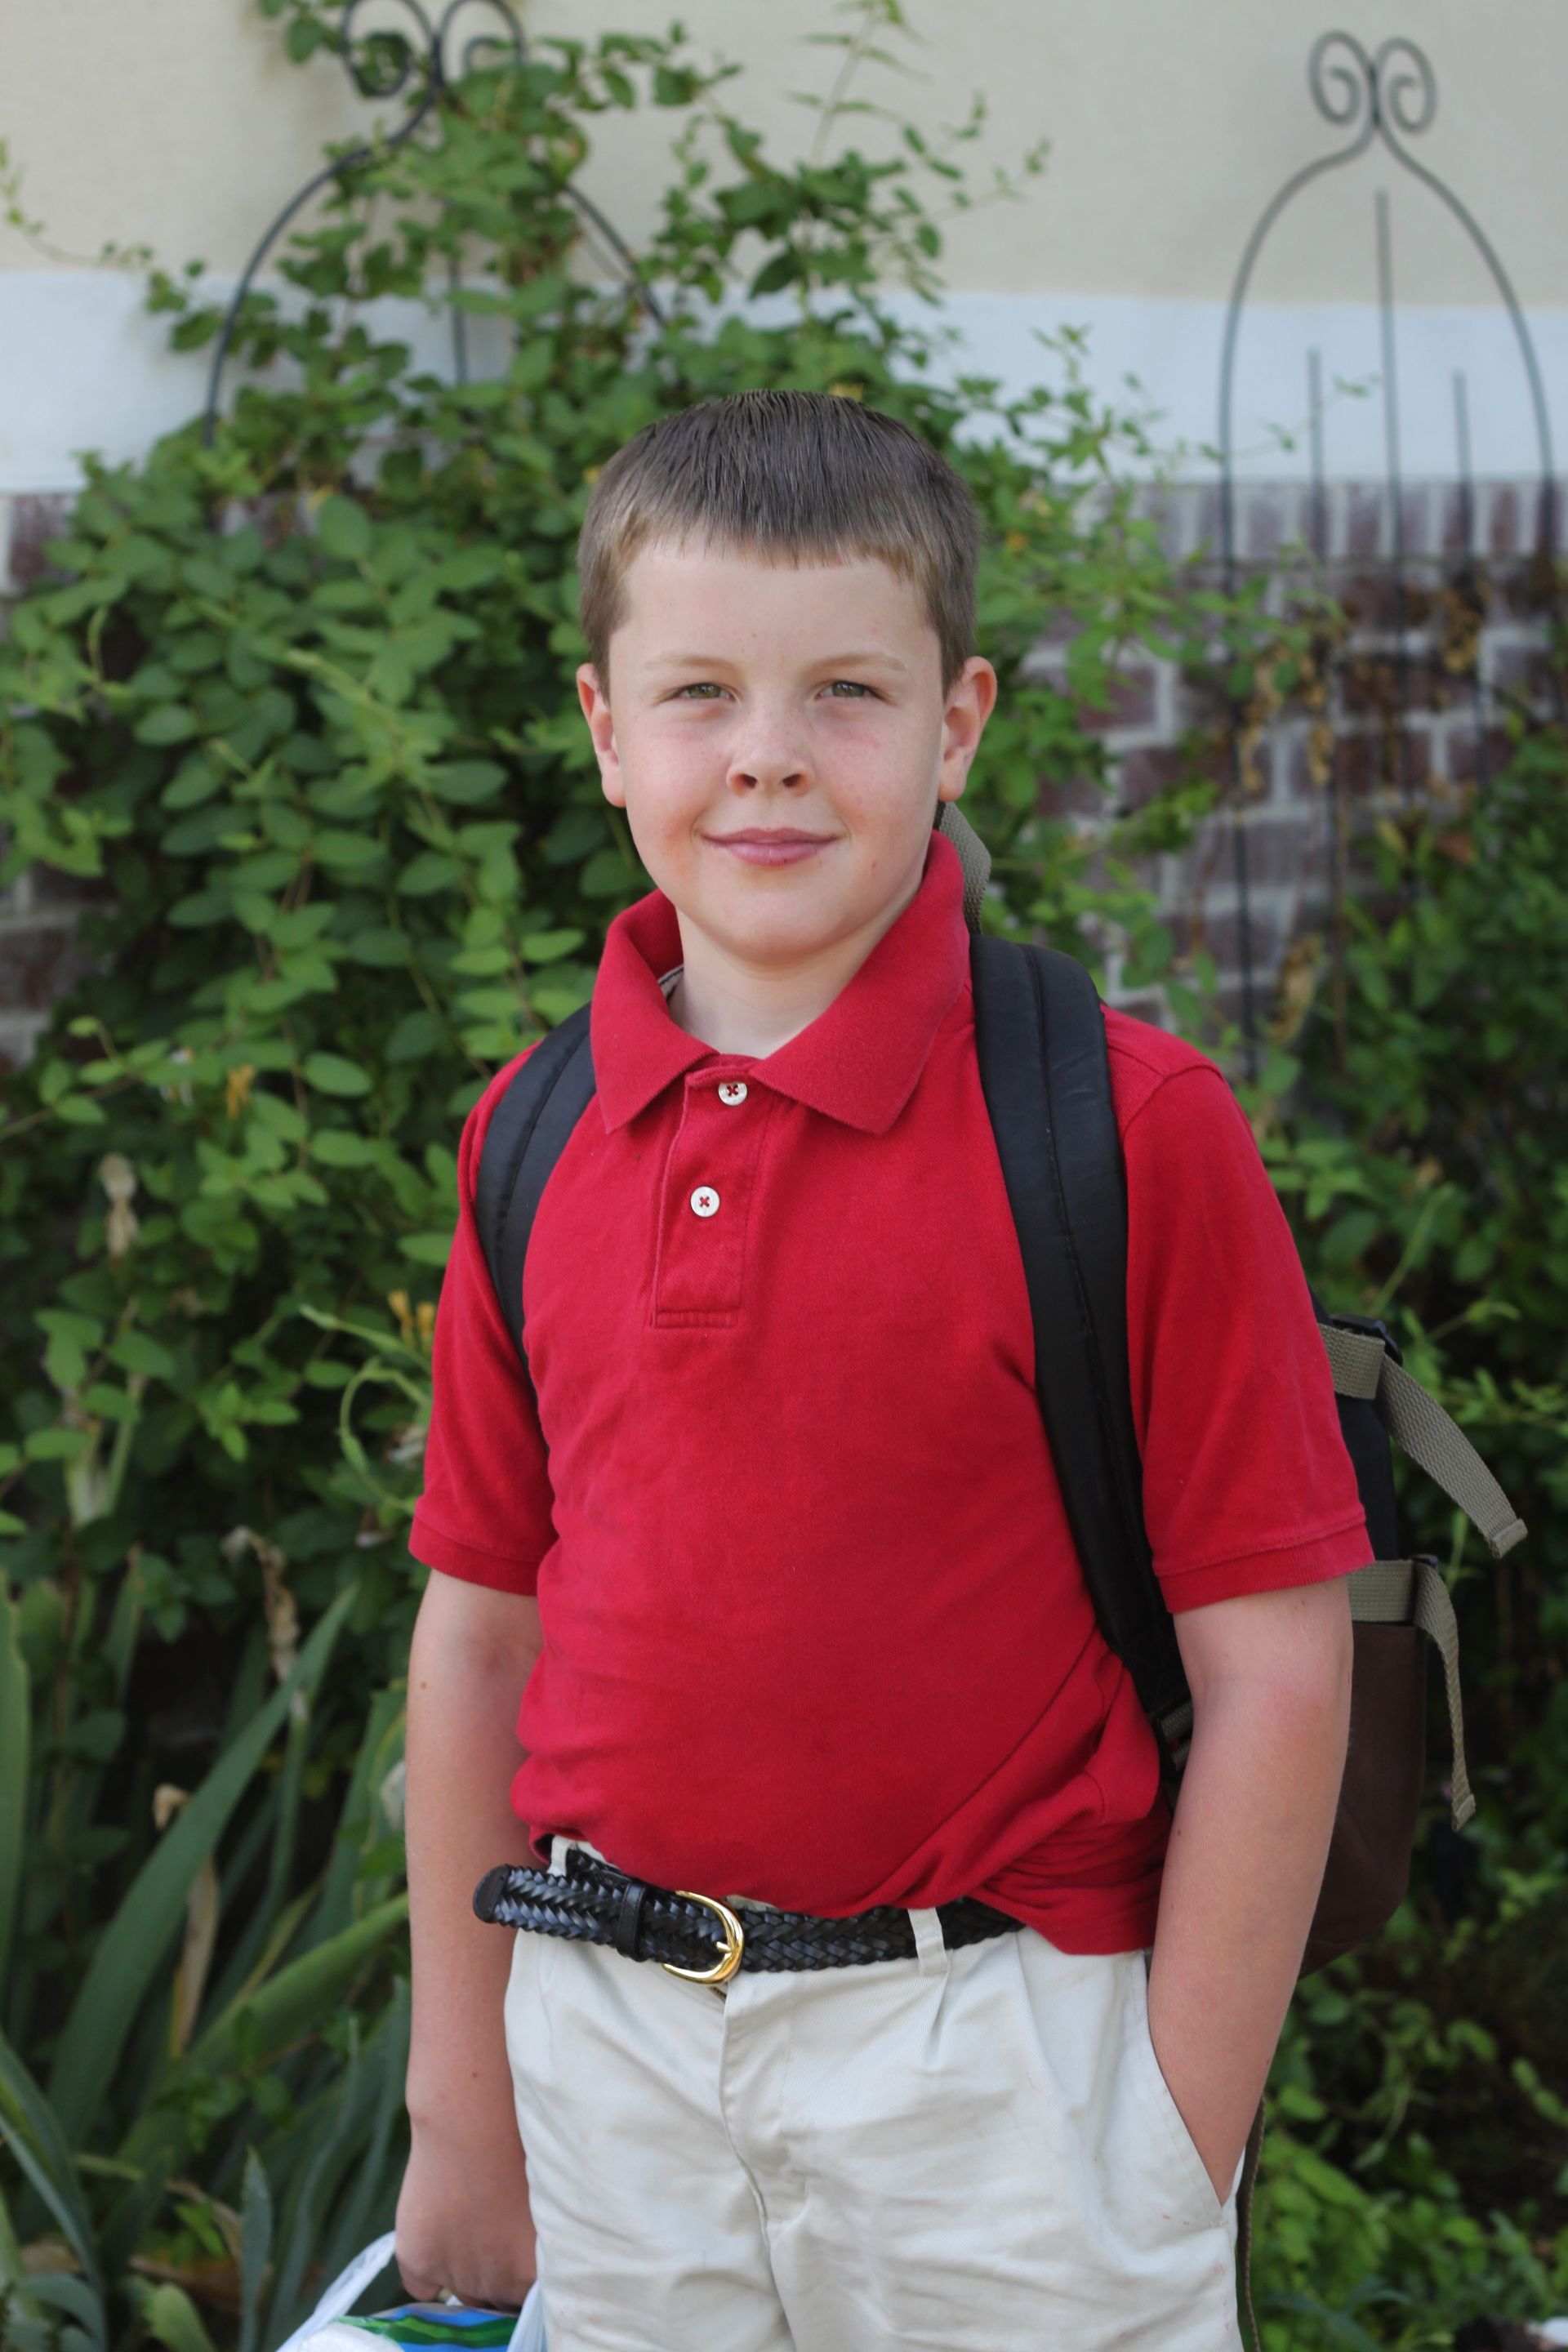 A portrait photograph of a boy ready for school.